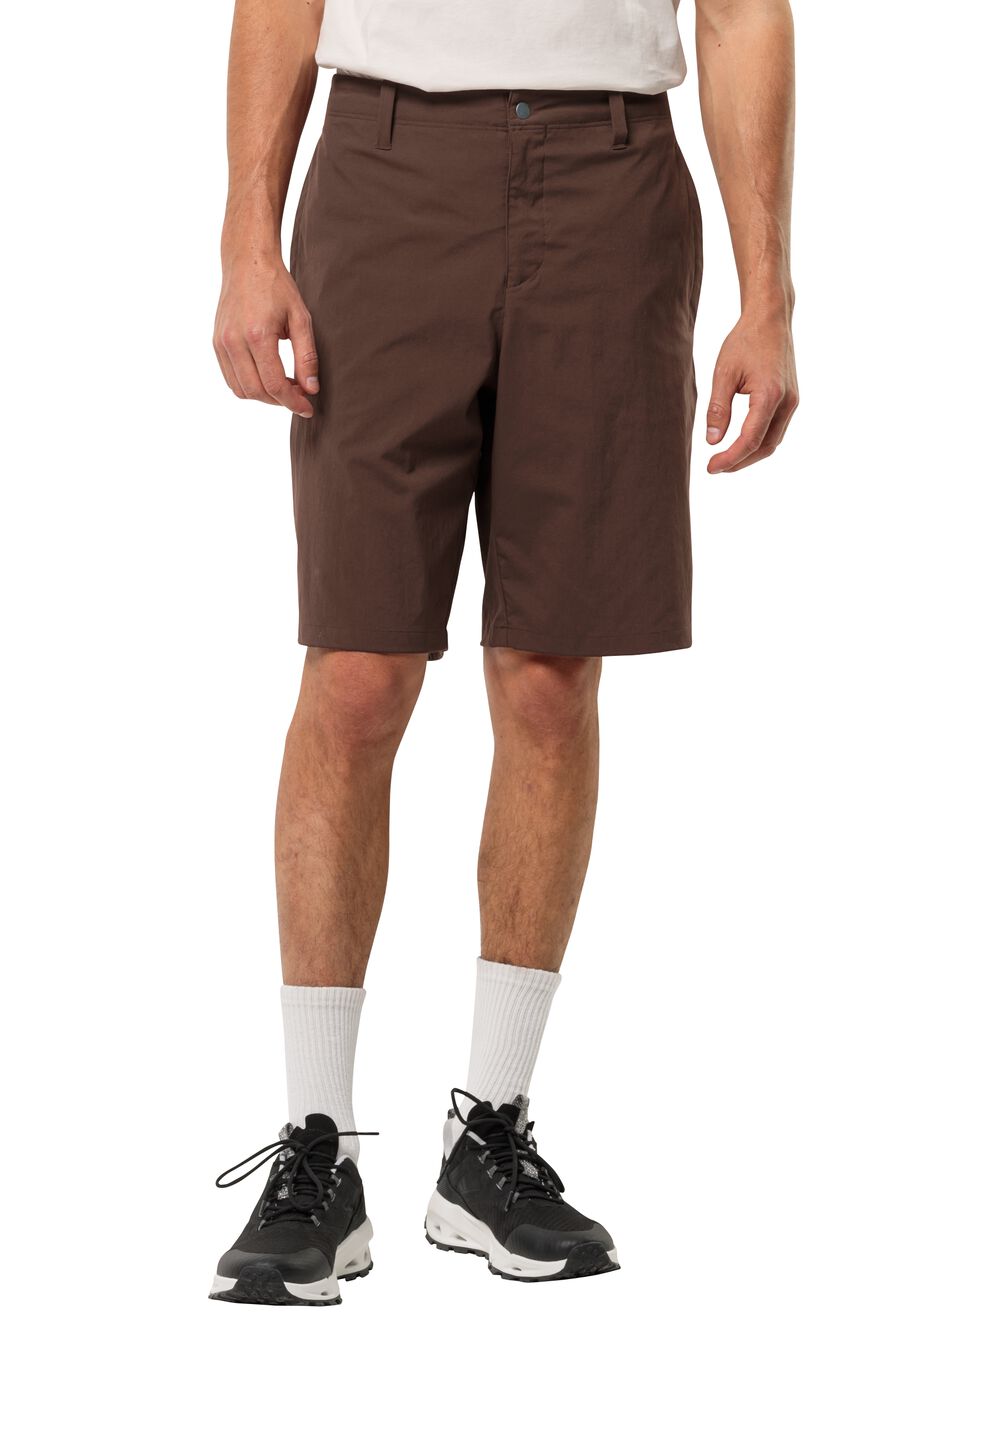 Jack Wolfskin Desert Shorts Men Korte broek Heren 46 bruin dark mahogany